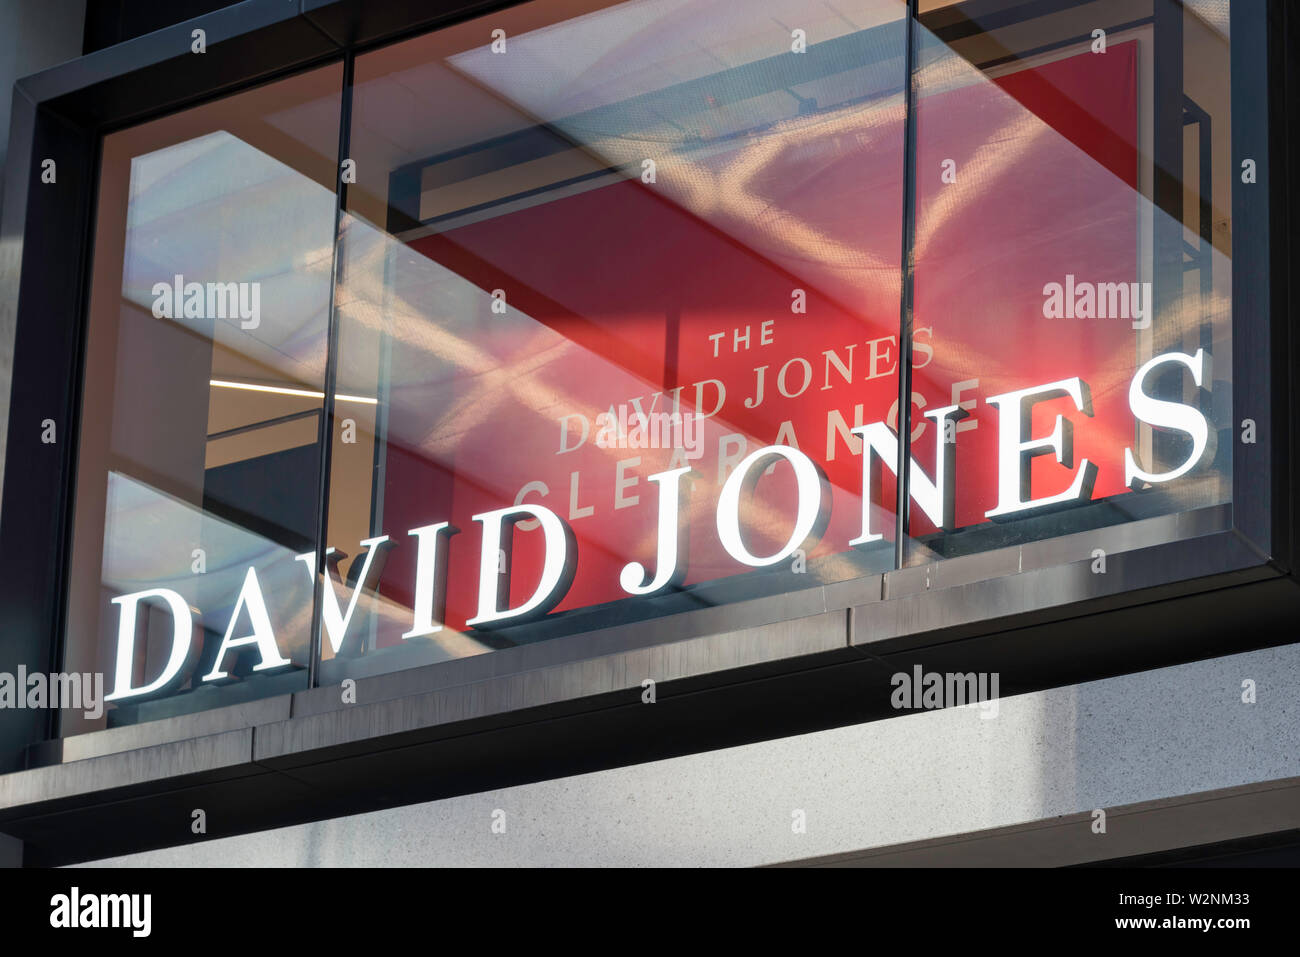 David jones sydney hi-res stock photography and images - Alamy